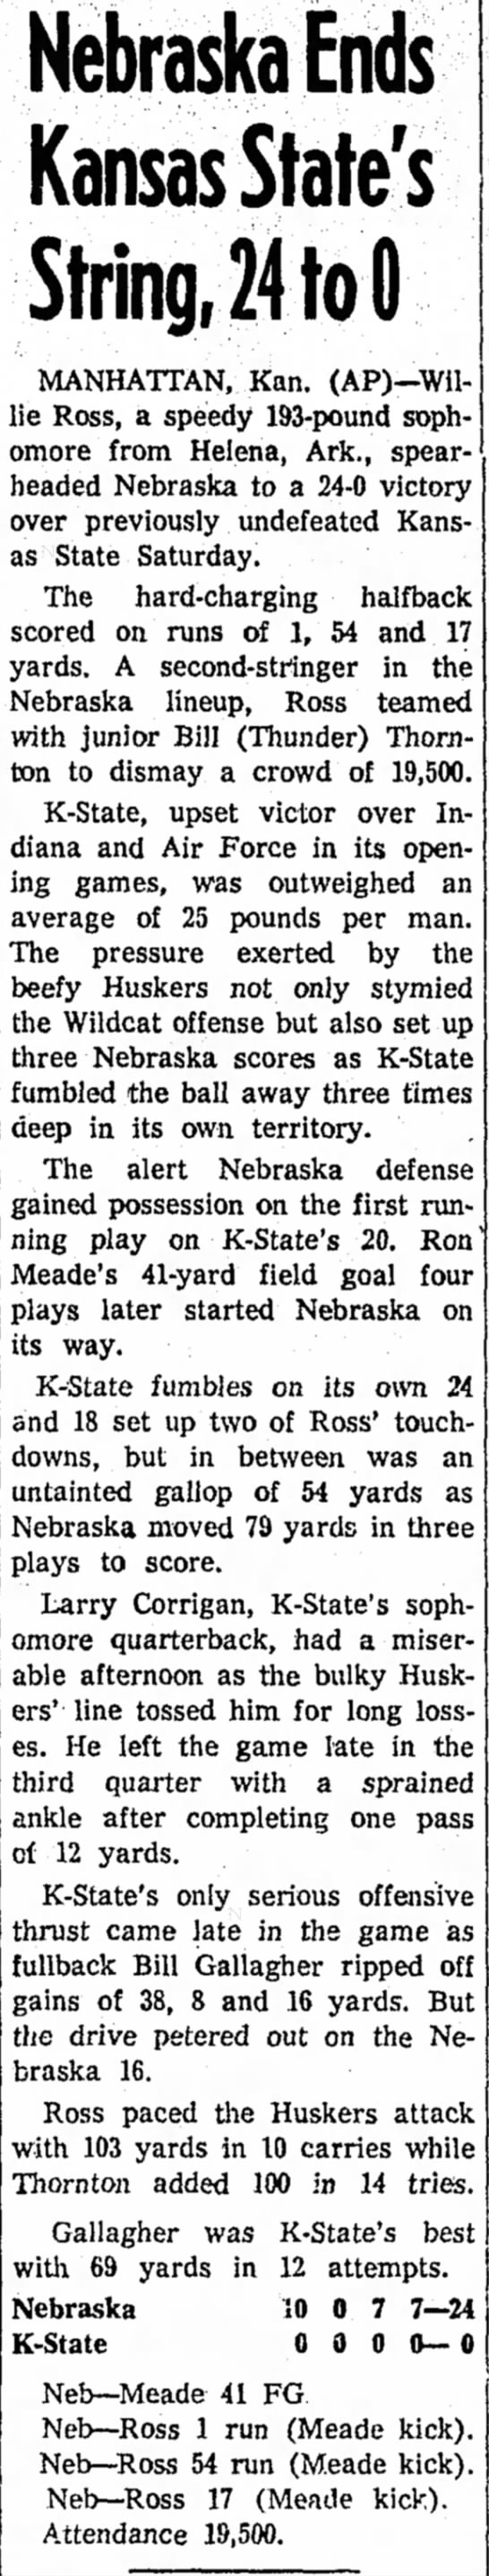 1961 Nebraska-Kansas State football, AP - 